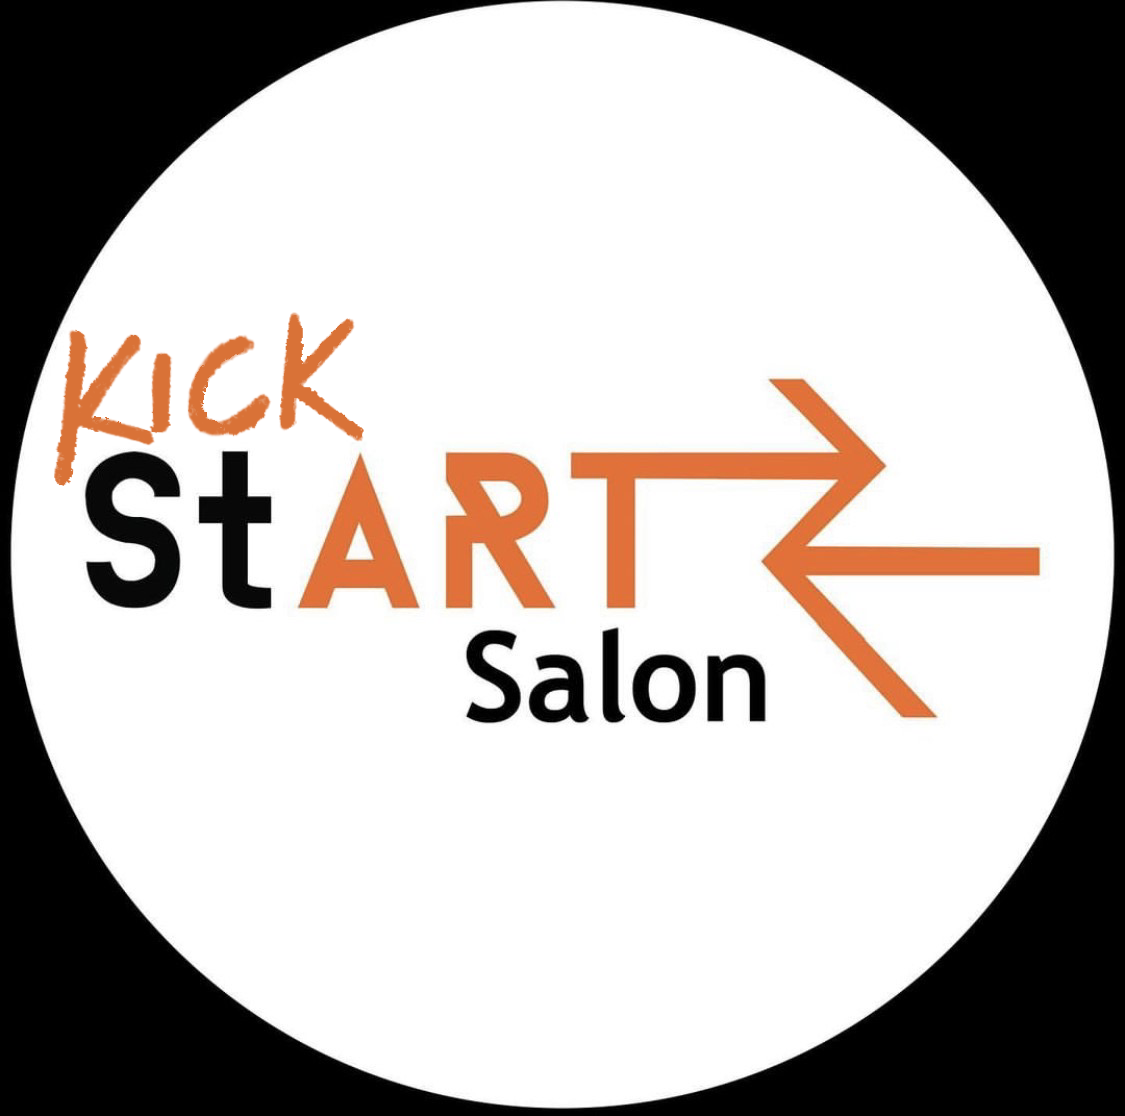 Kick StART Salon Event